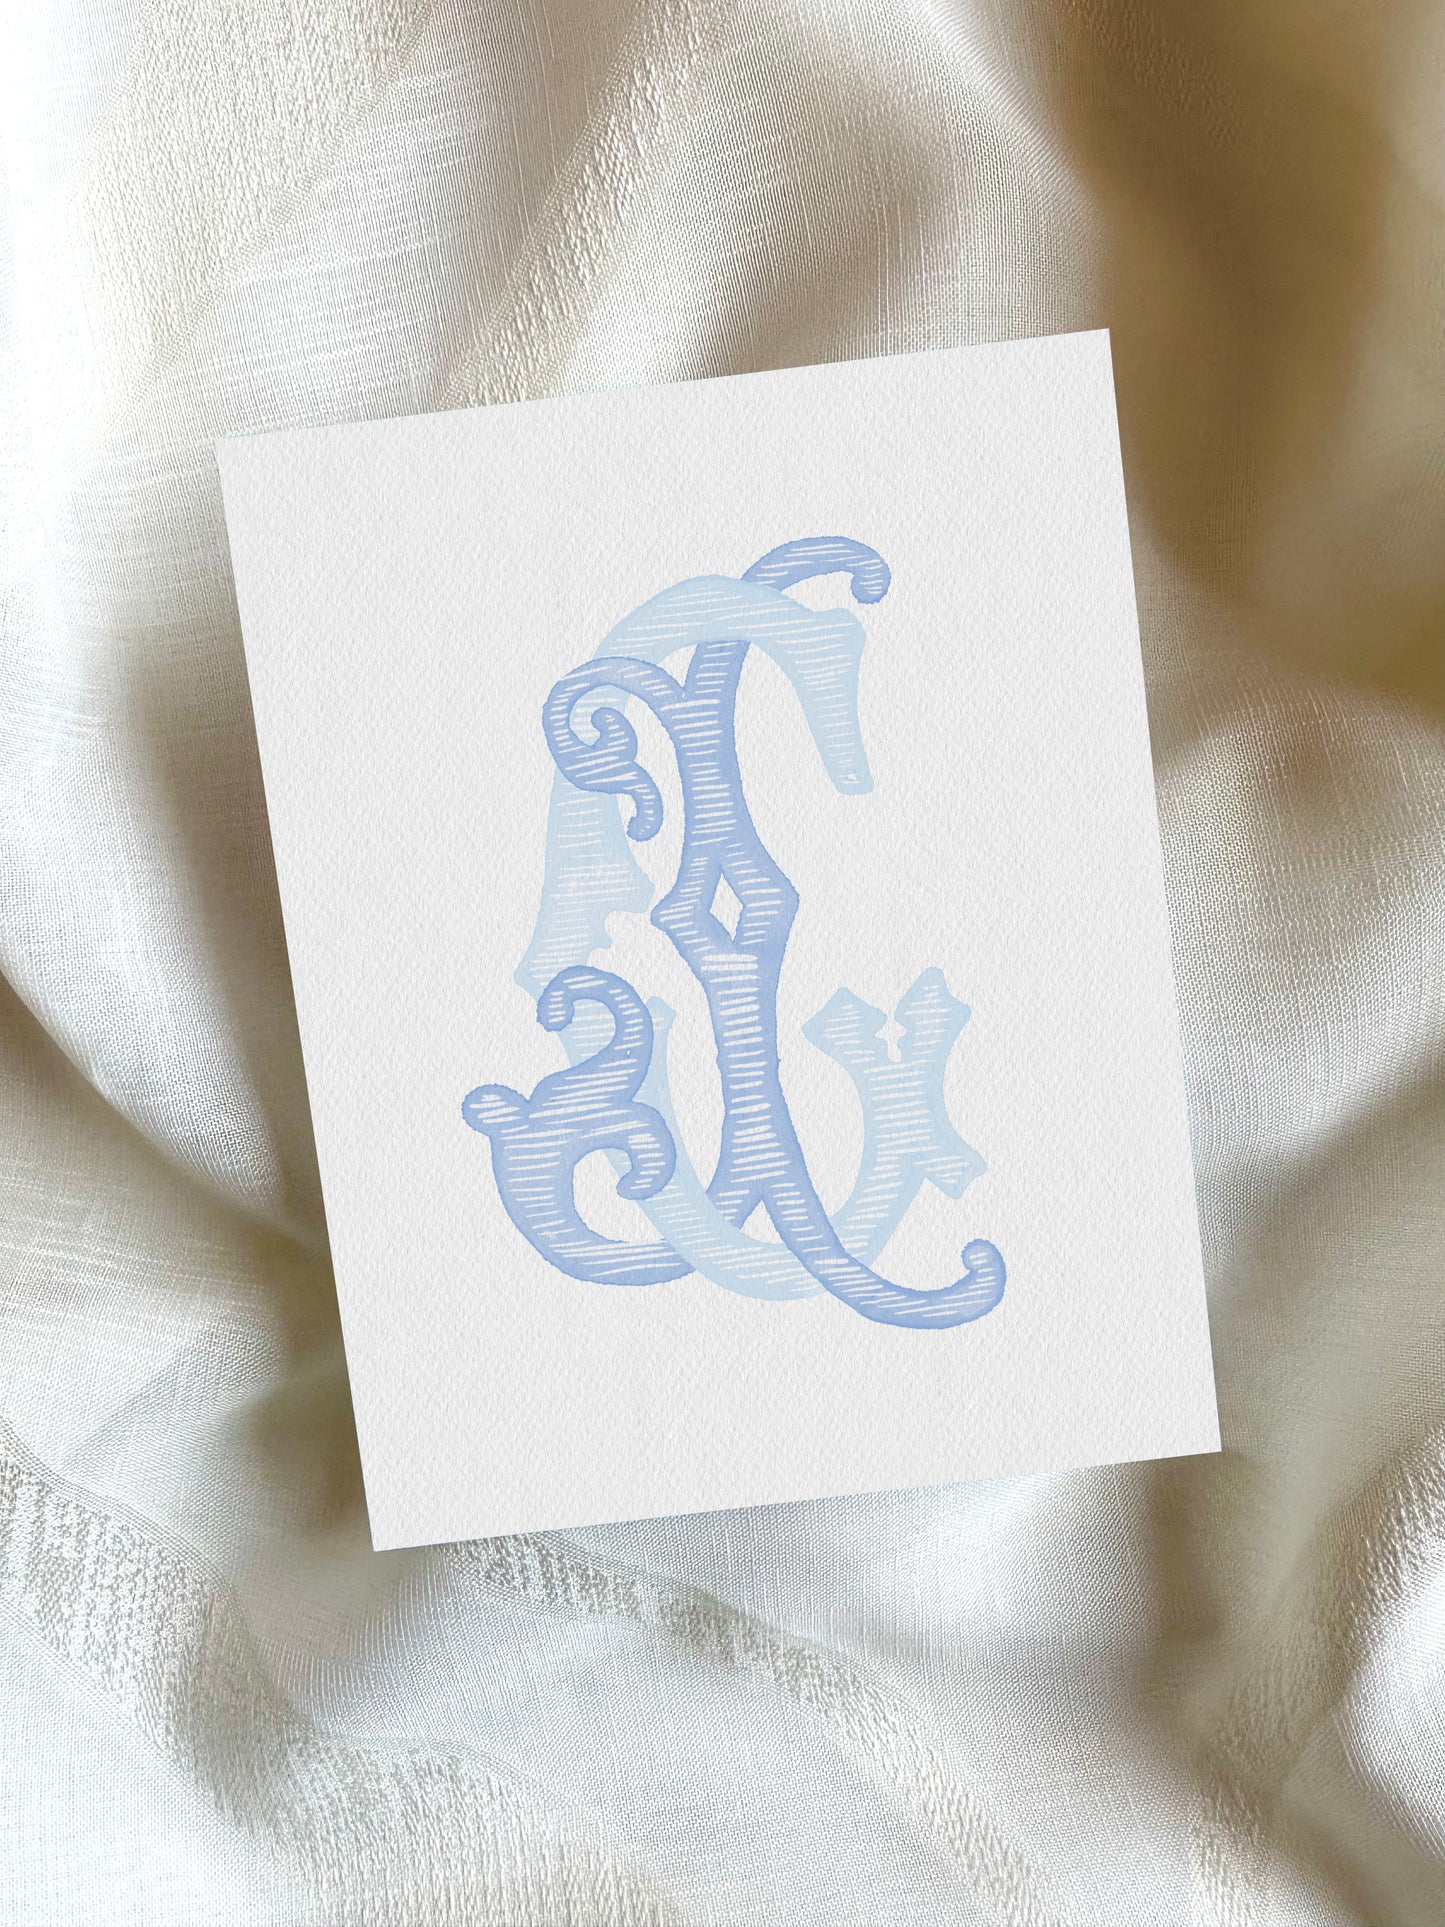 2 Letter Monogram with Letters GJ JG | Digital Download - Wedding Monogram SVG, Personal Logo, Wedding Logo for Wedding Invitations The Wedding Crest Lab